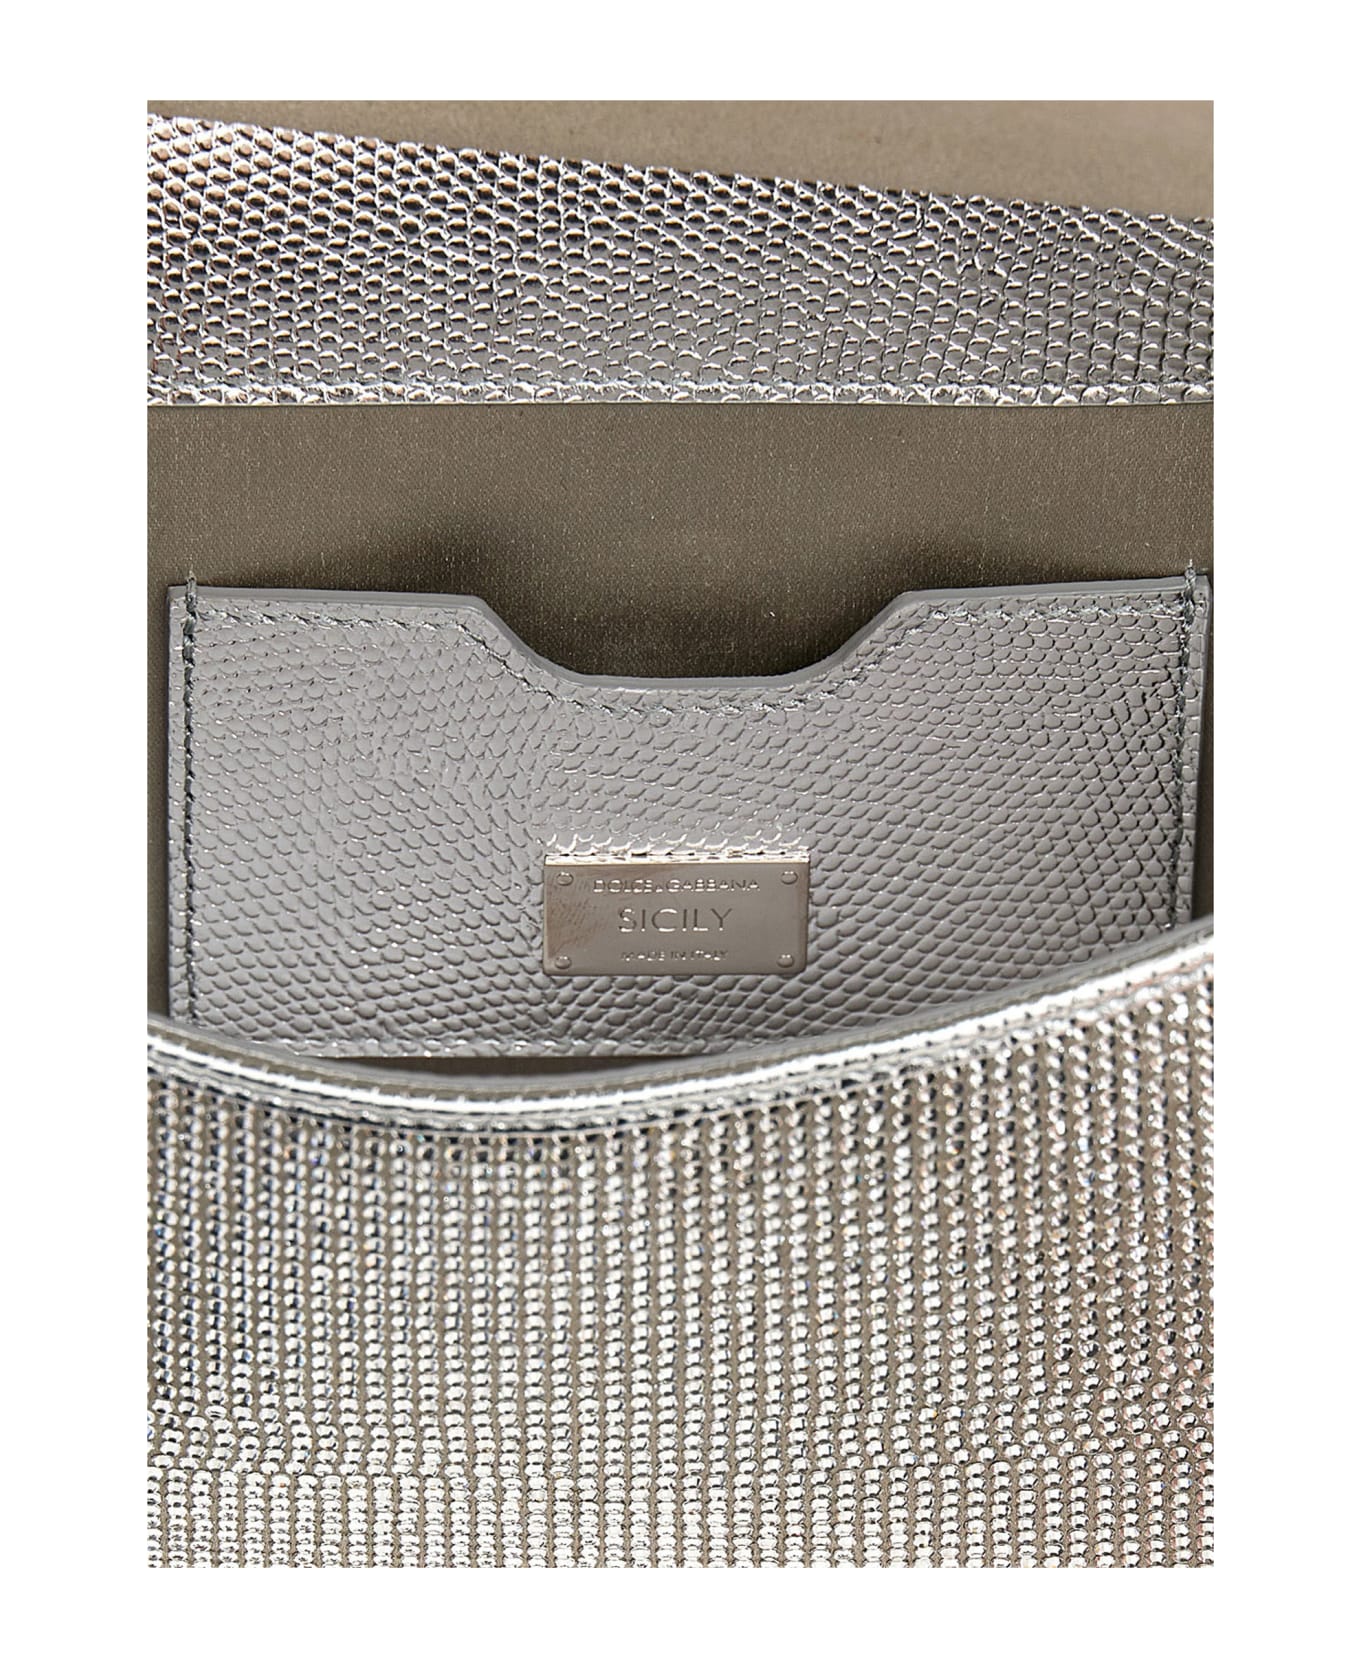 Dolce & Gabbana 'sicily' Small Handbag - Silver